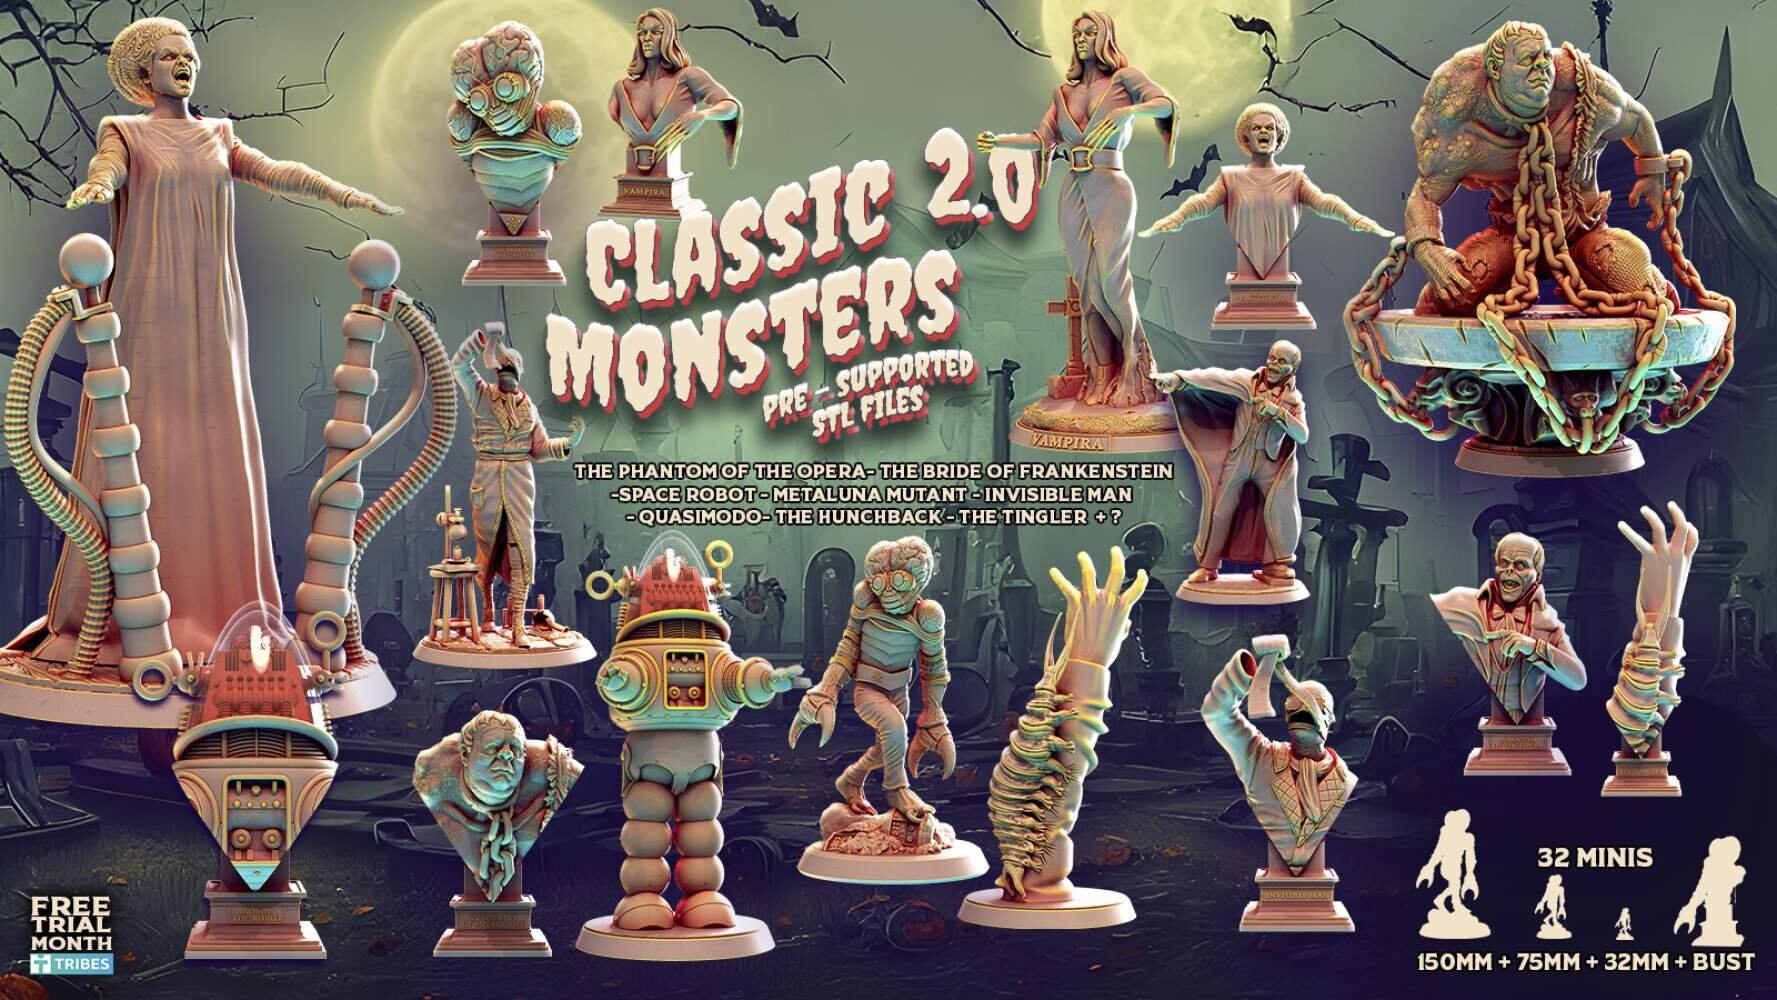 Metaluna Mutante Miniature | Classic Monsters | 32mm 75mm 150mm Bust | DnD Miniature | Dungeons and Dragons DnD 5e Feature Film Theatre - Plague Miniatures shop for DnD Miniatures